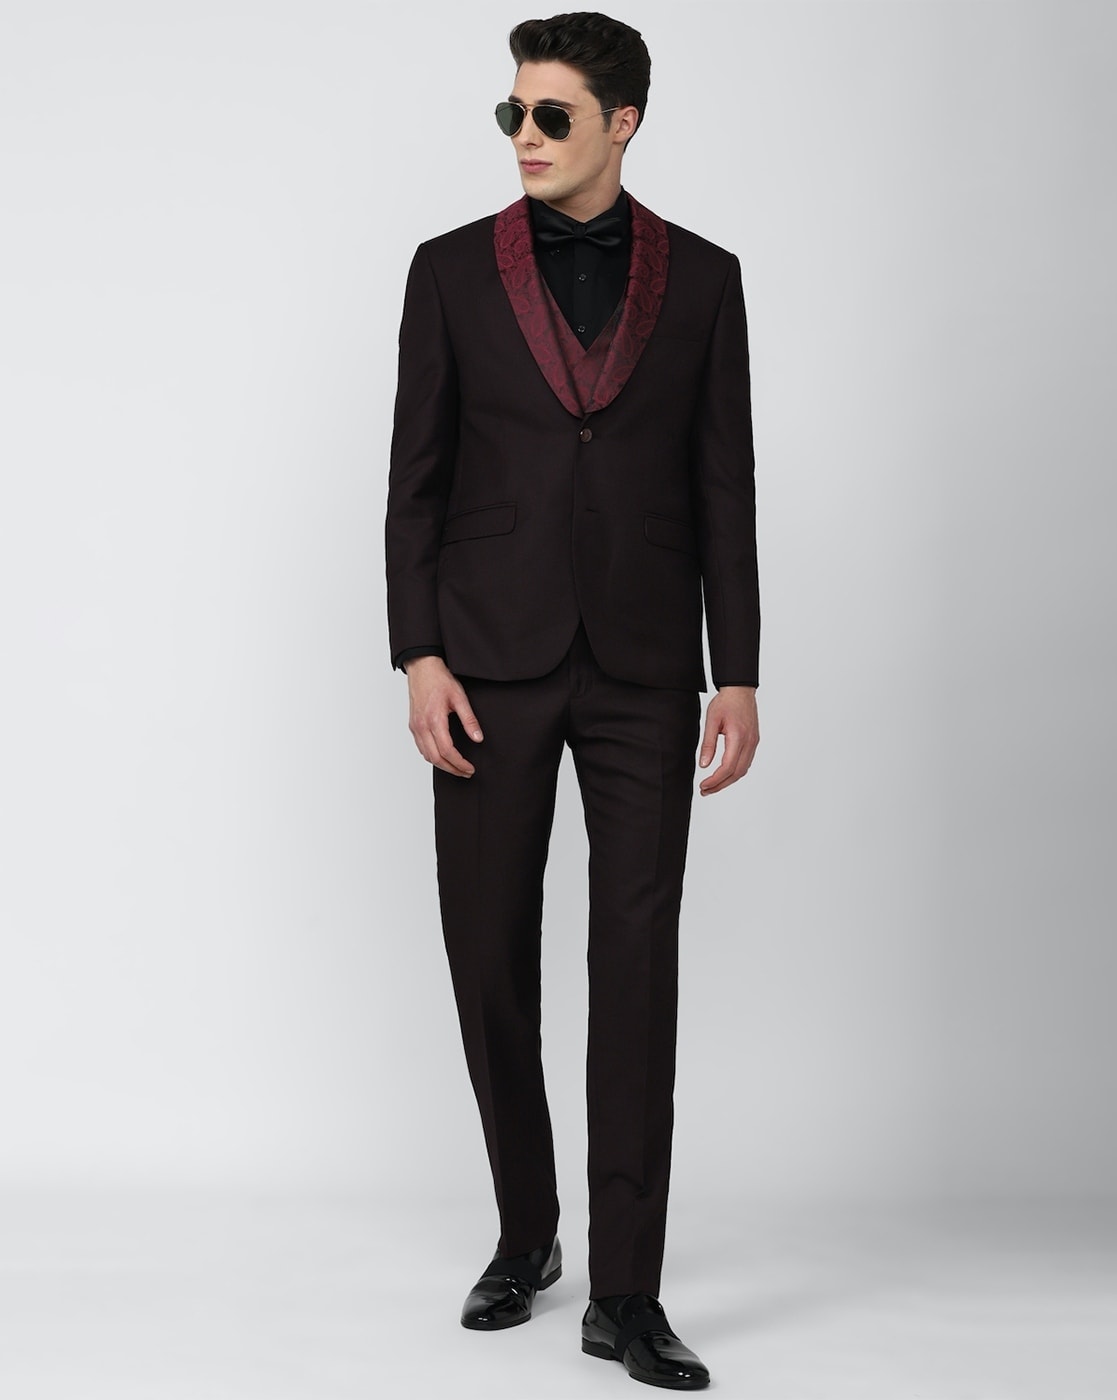 Men's Burgundy Suits & Tuxedos | Maroon Suits | Bradymensuit